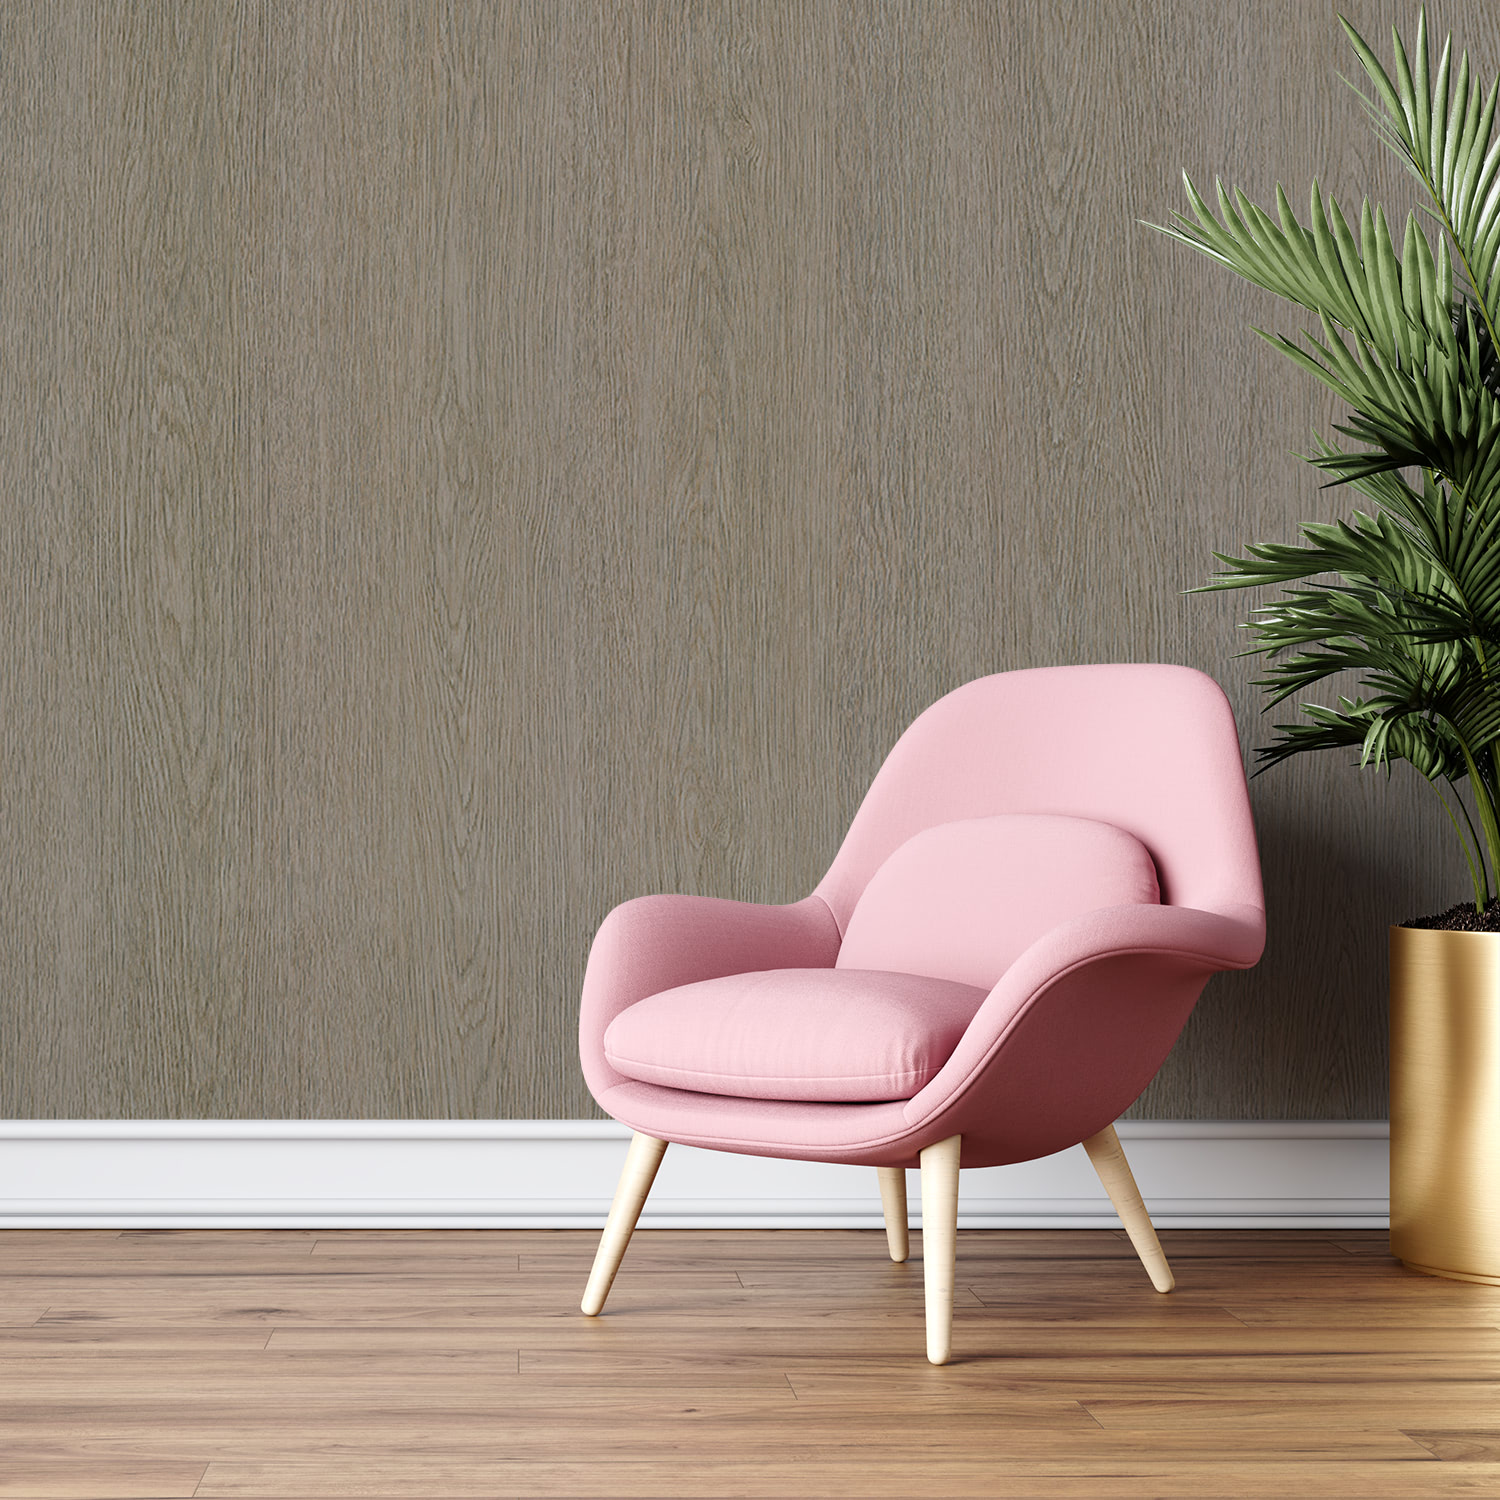 rouleau-adhesif-decoratif-texture-chene-gris-clair-decoration-adhesive-meuble-mur-decoorouleau-2